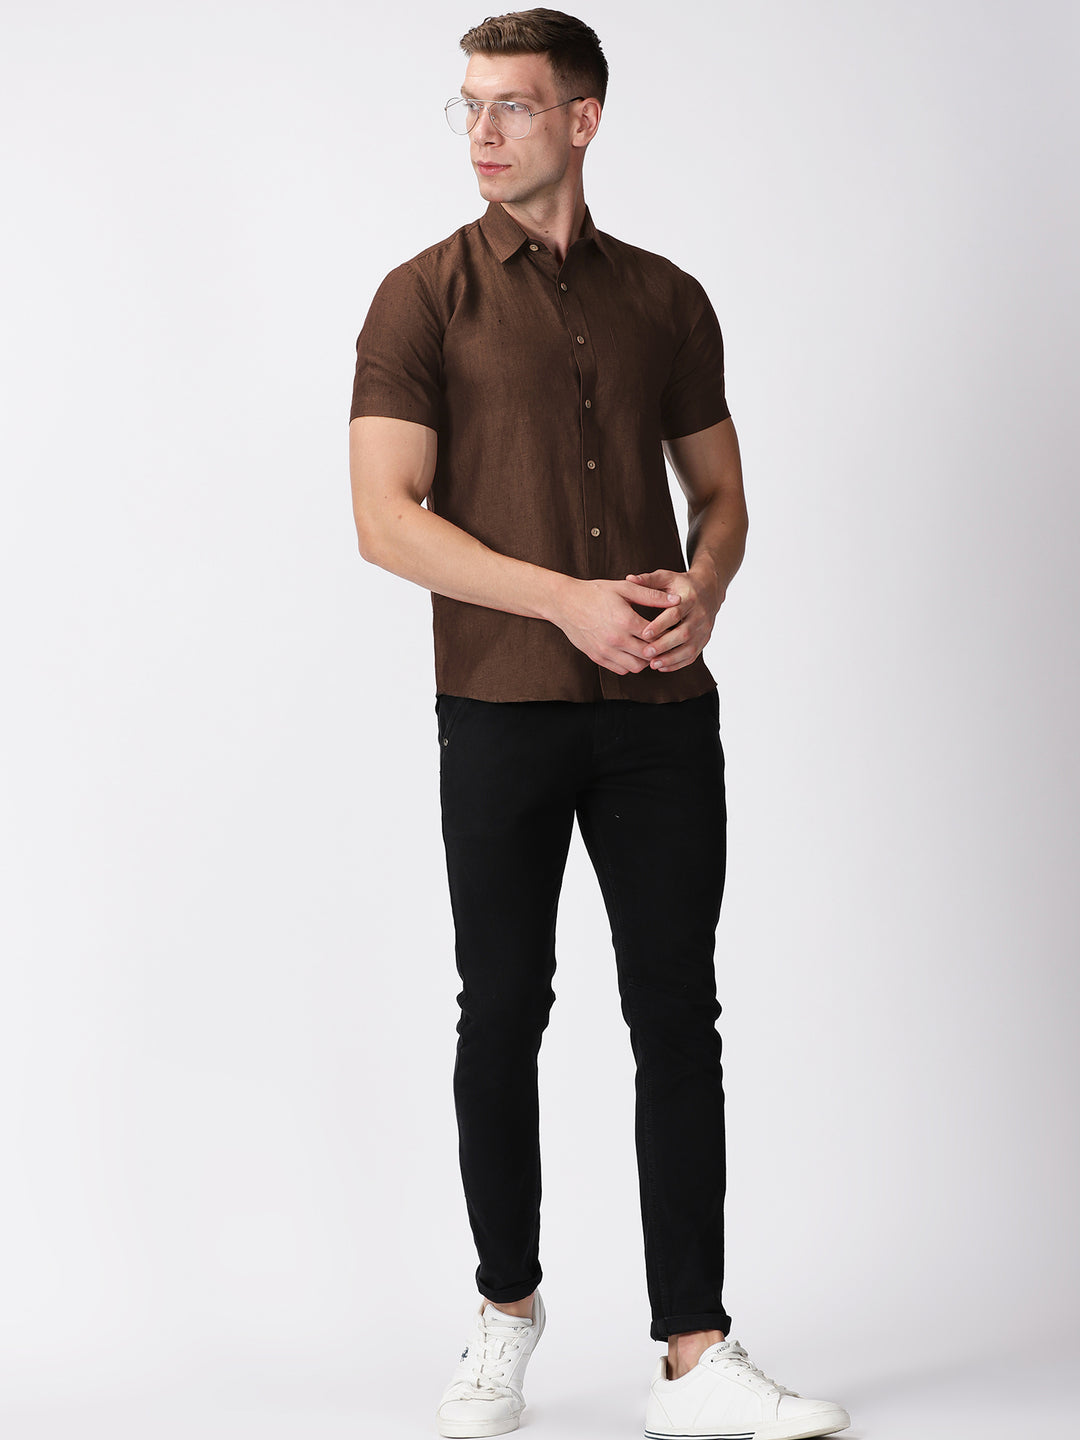 Harvey - Pure Linen Half Sleeve Shirt - Coffee Brown